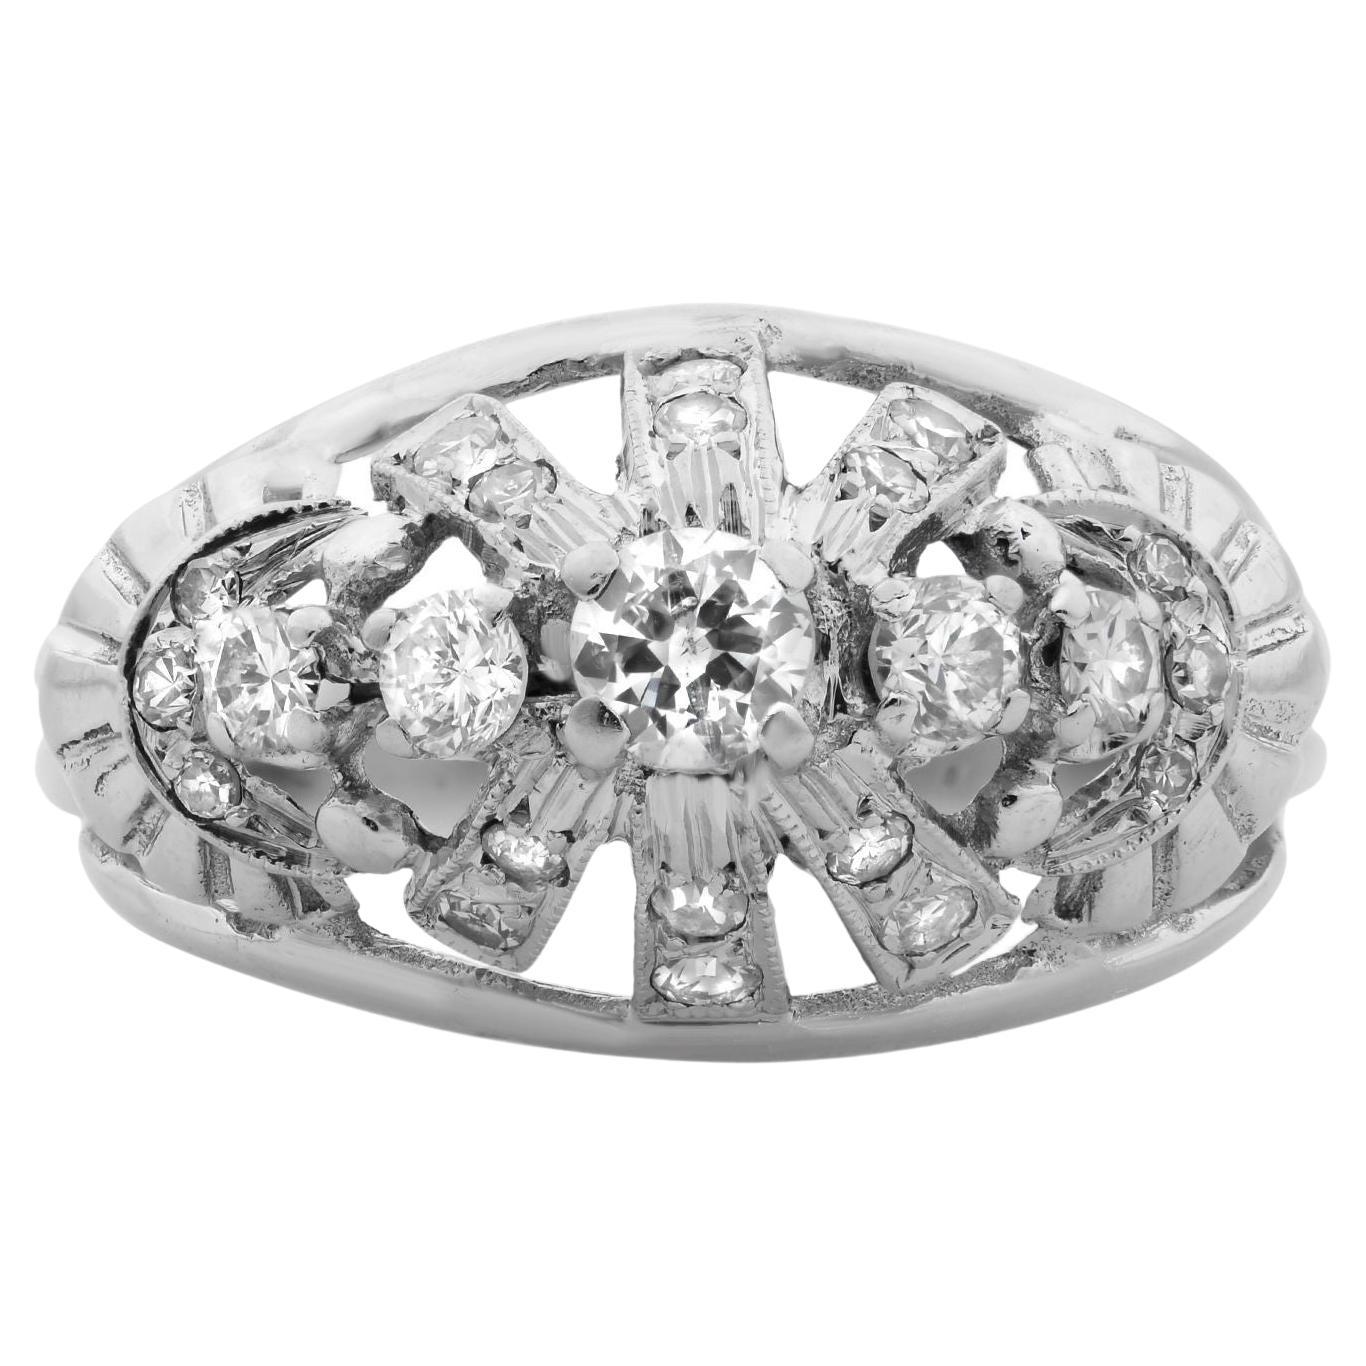 Vintage Dome Diamond Cocktail Ring 14K White Gold 0.36Cttw